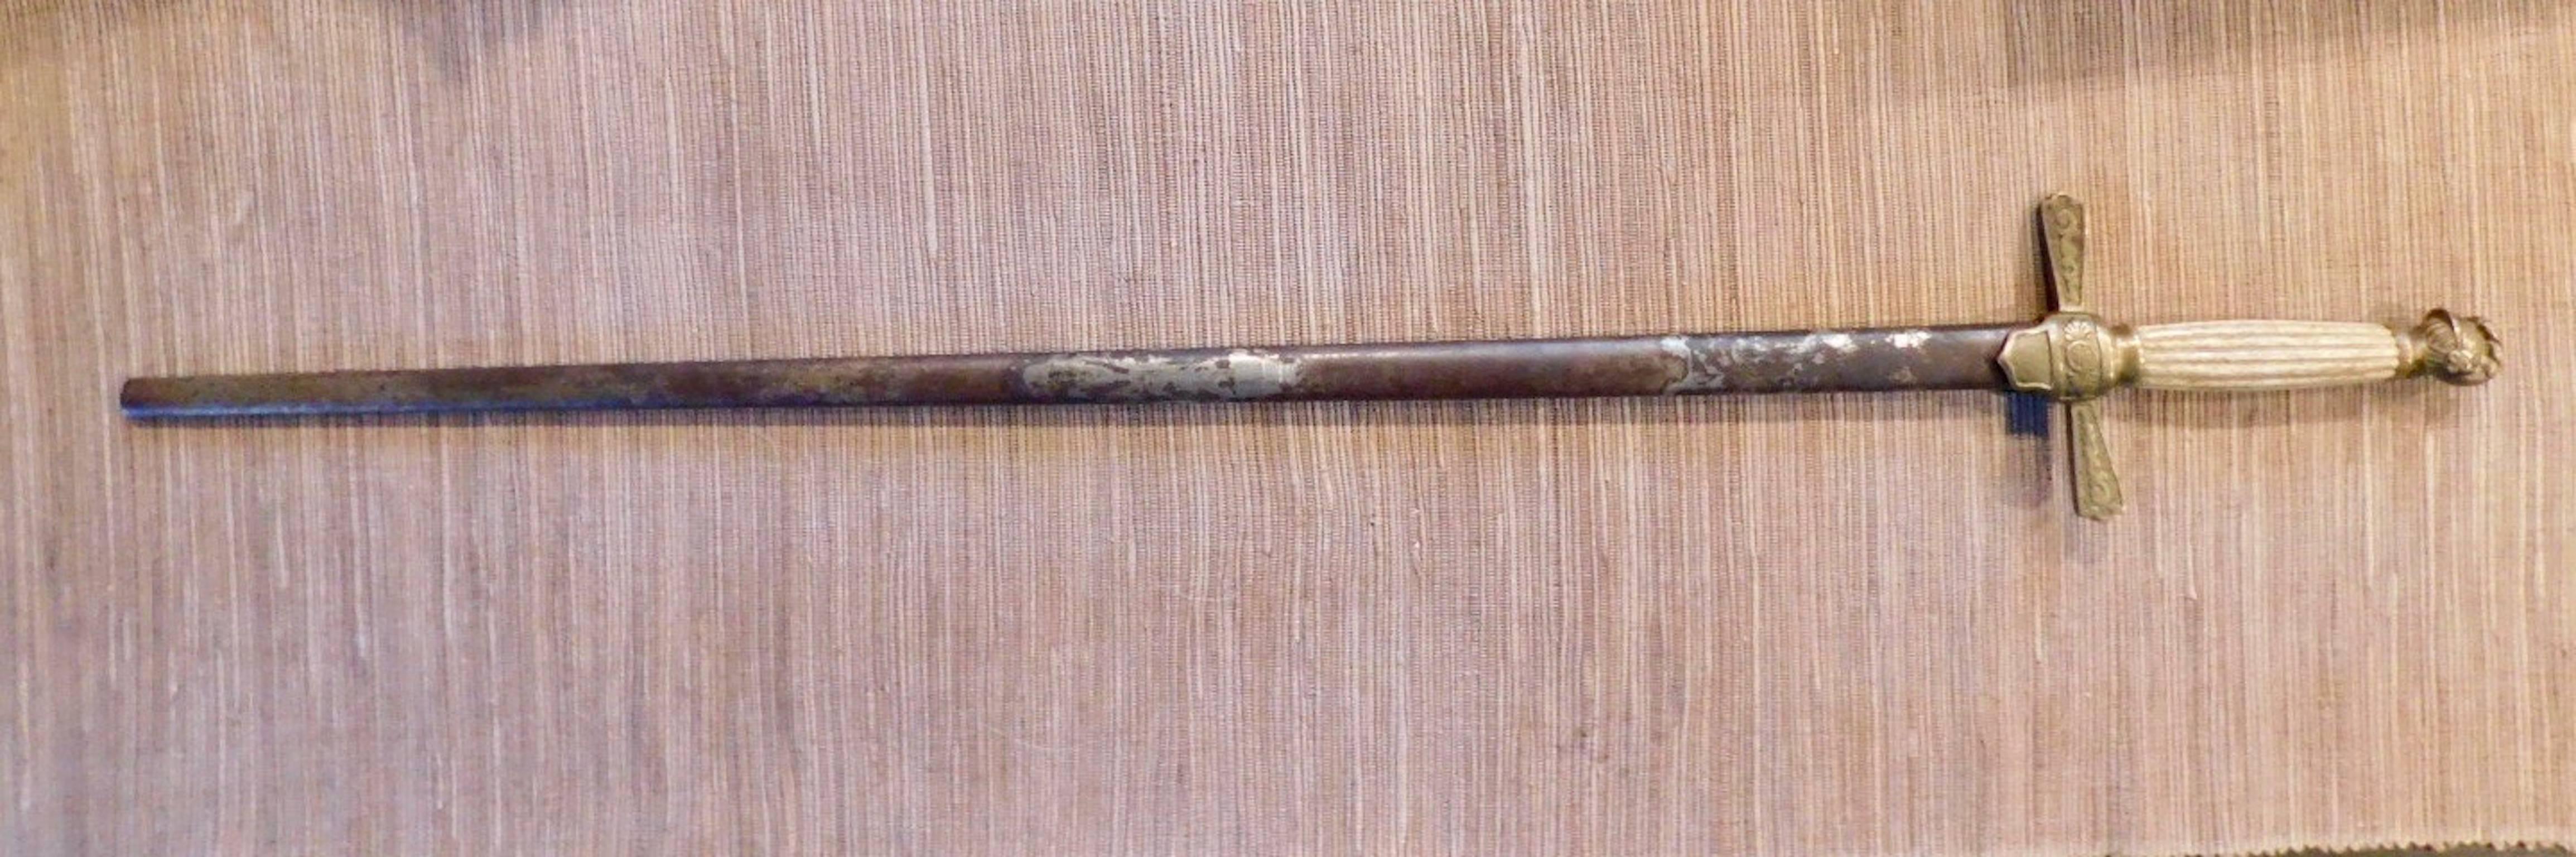 Militia sword from U.S. military,
circa 1830s-1850s.